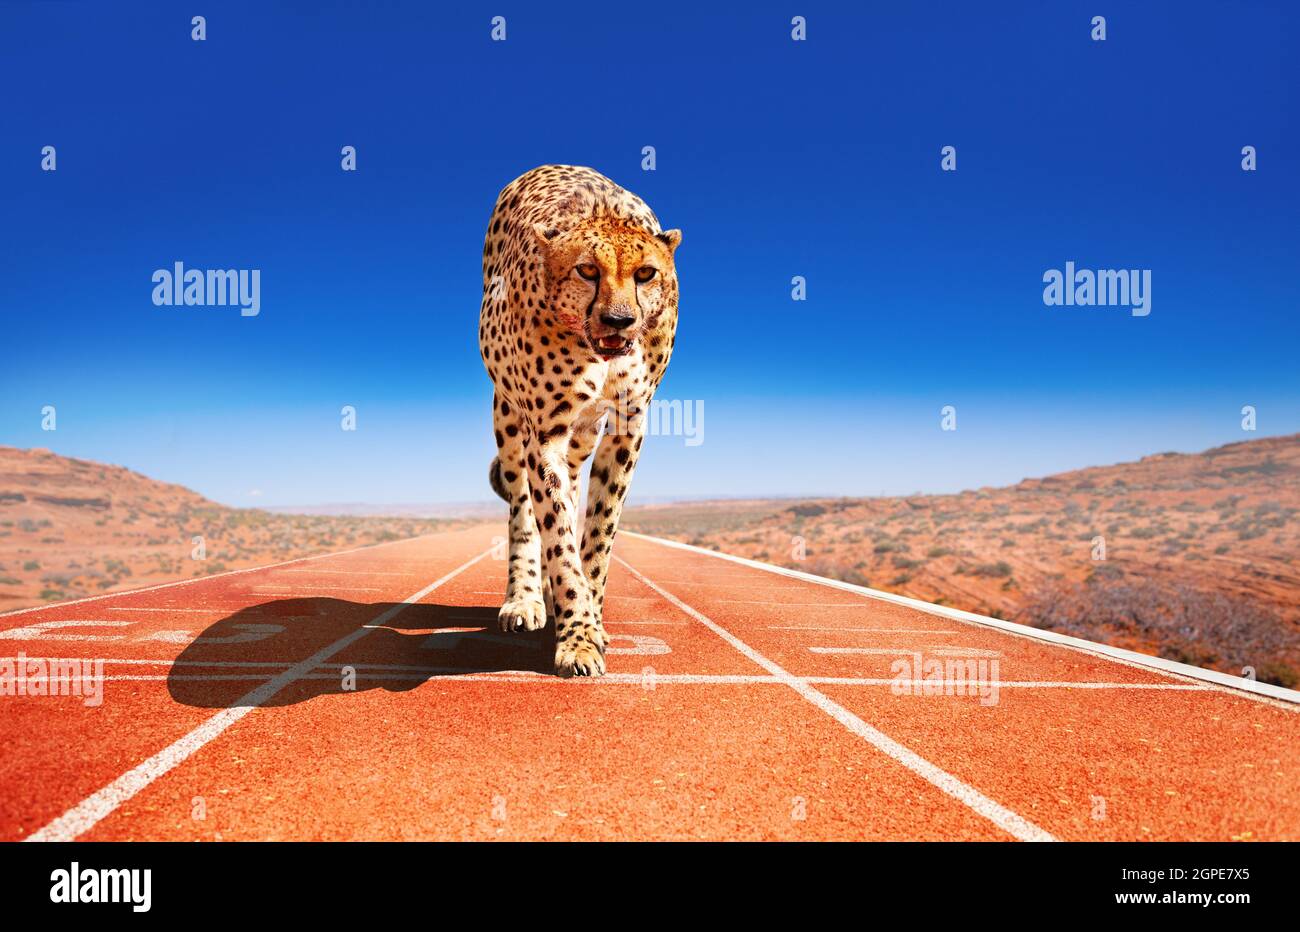 Cheetah with predator look on a sprint race track Stock Photo